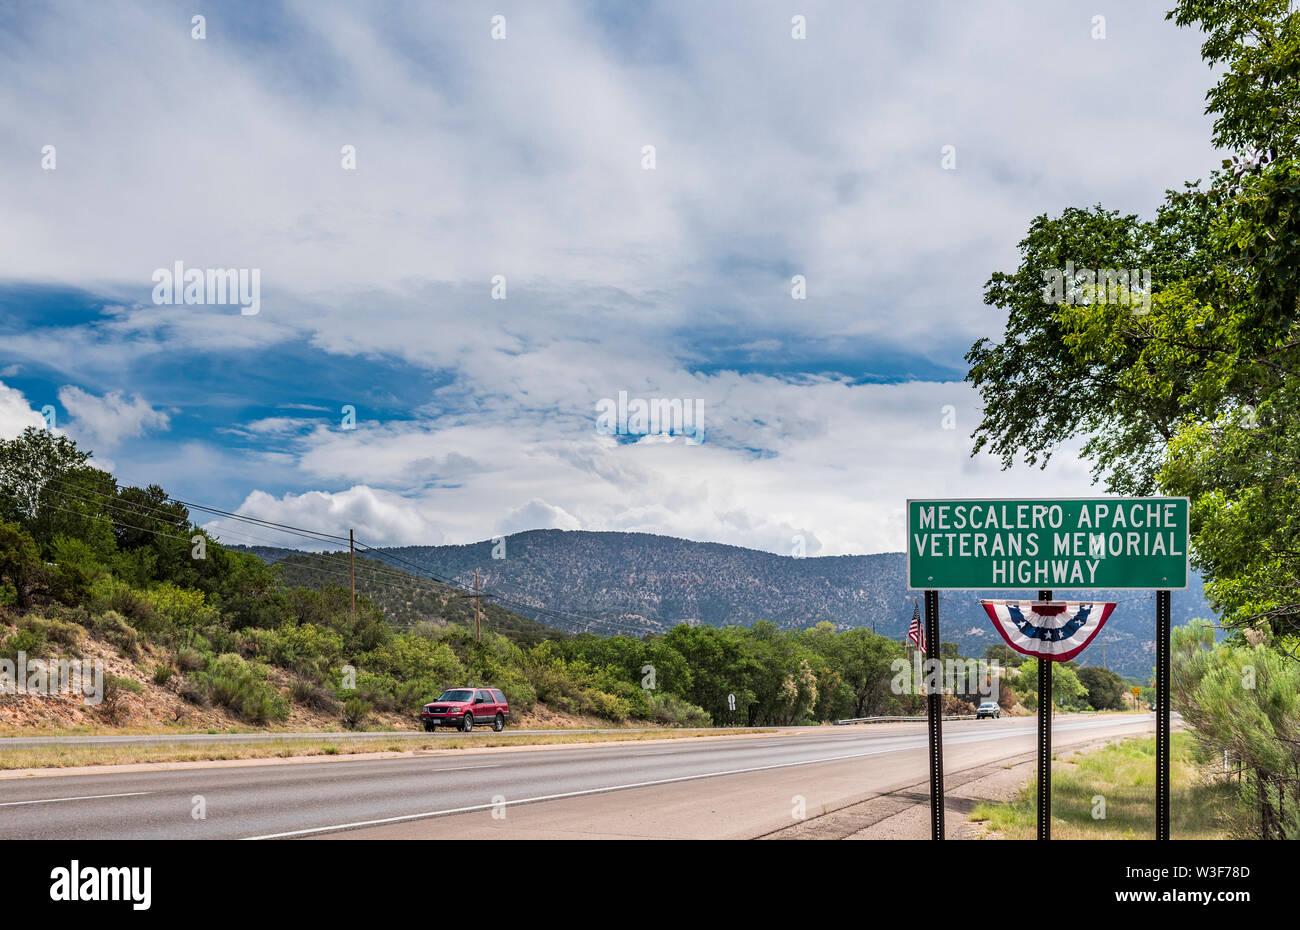 Mescalero Apache Veterans Memorial Highway sign on US Highway 70, Mescalero Apache Indian Reservation, Otero County, New Mexico, Stock Photo